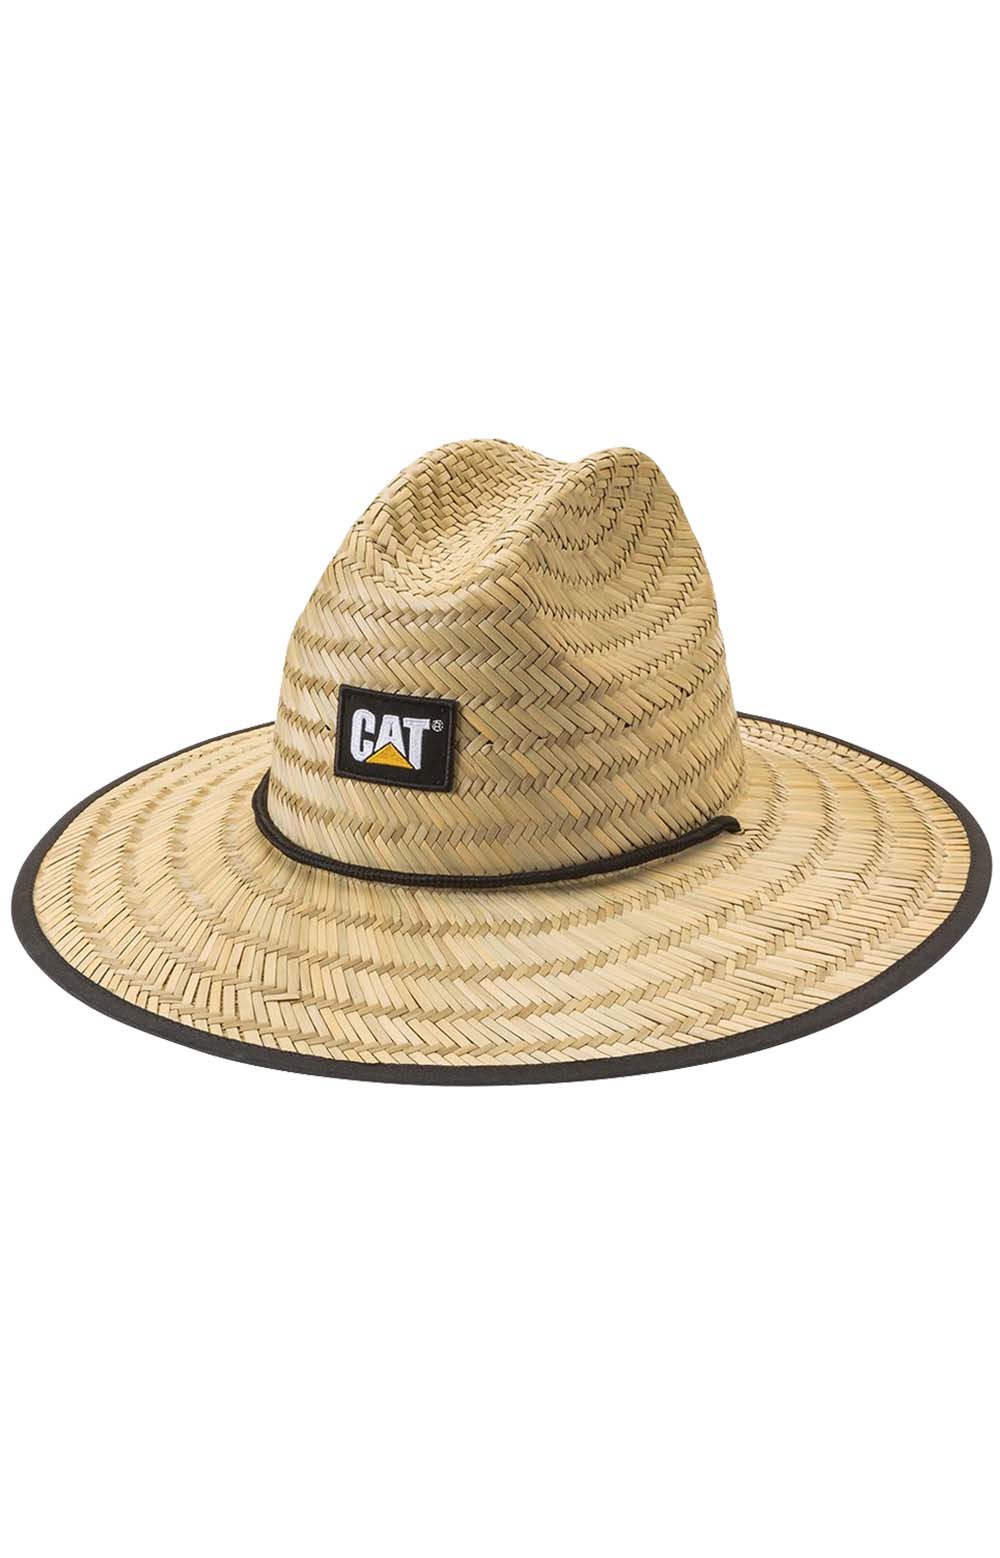 Cat Straw Hat